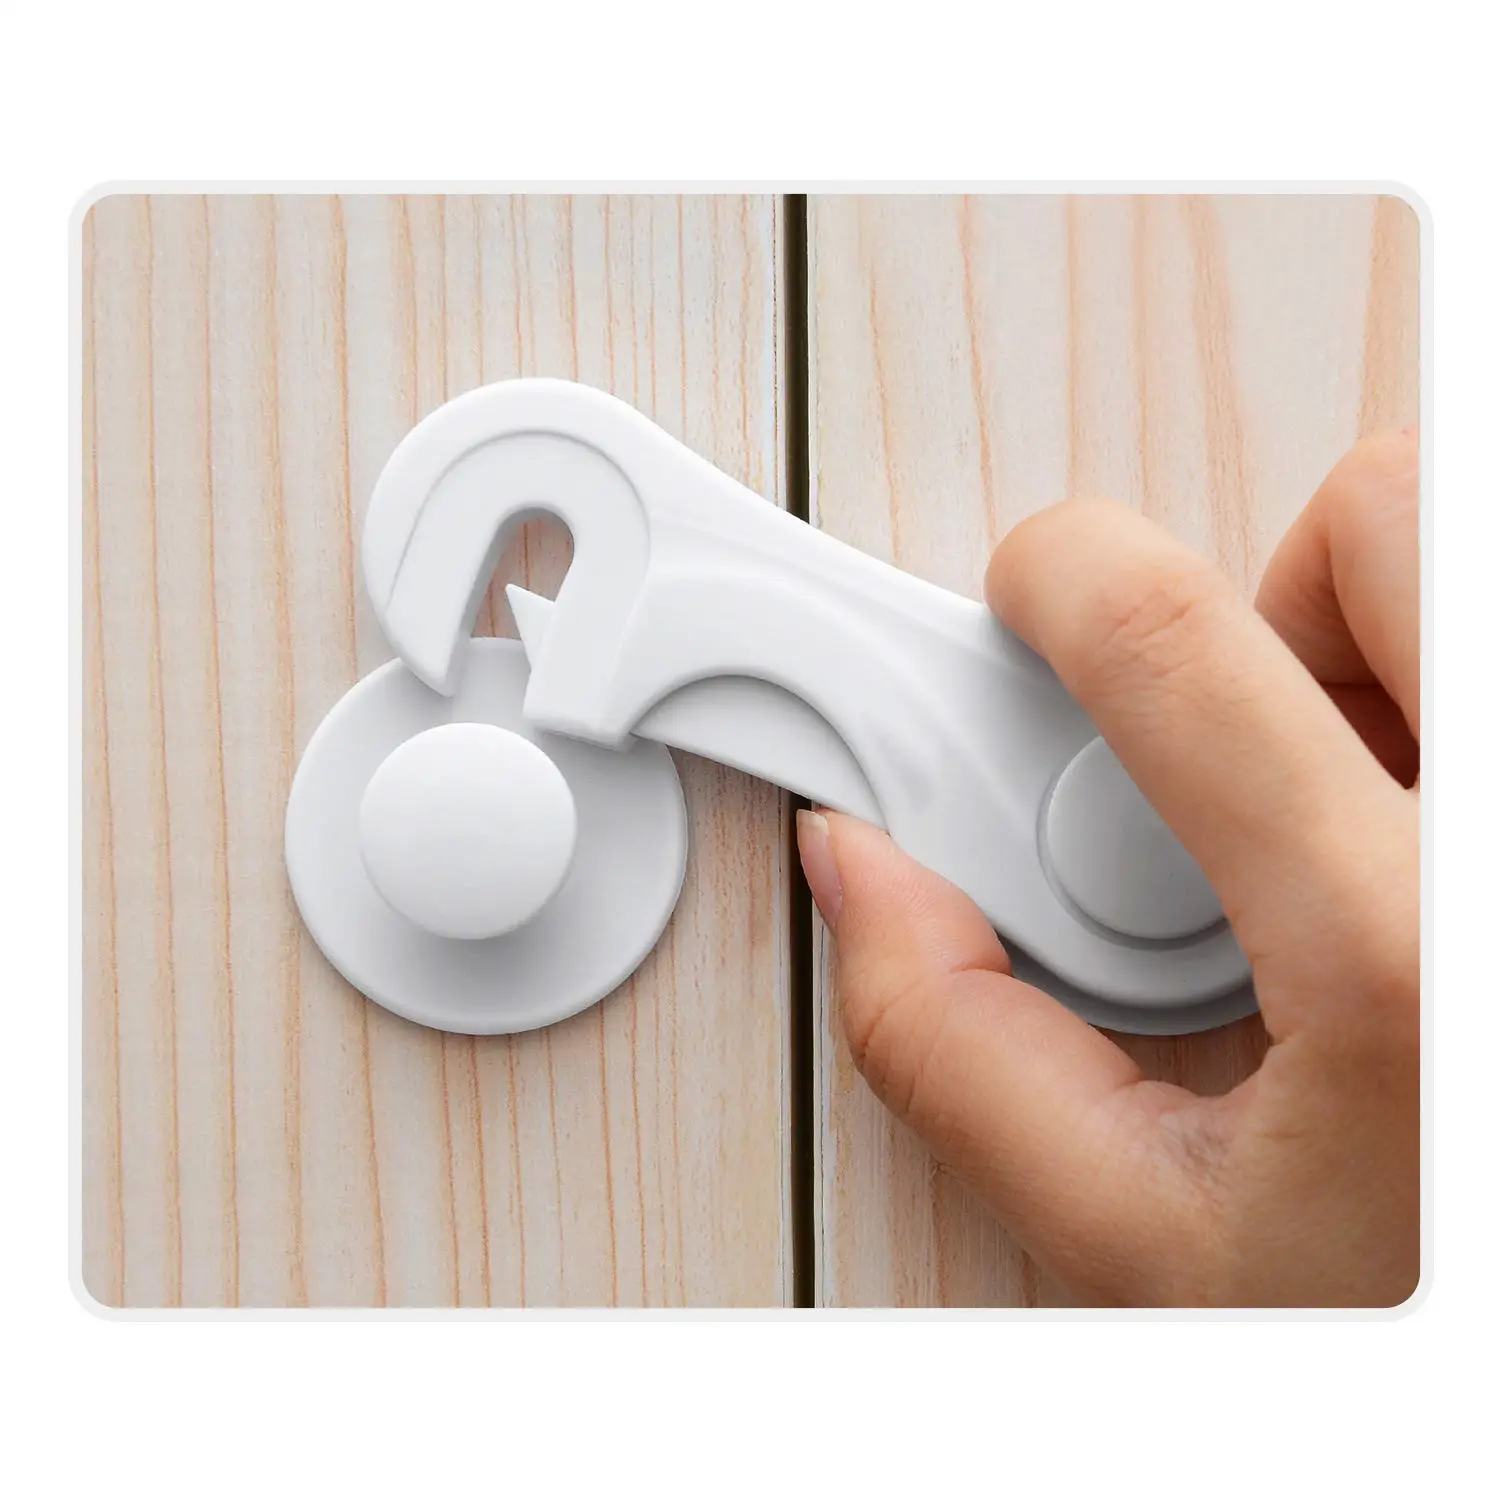 Cabinet Lock Child Safety Locks Baby Anti-Pinching Locks infant Proofing Anti-collision Drawer Locker with Strong Adhesive Tape